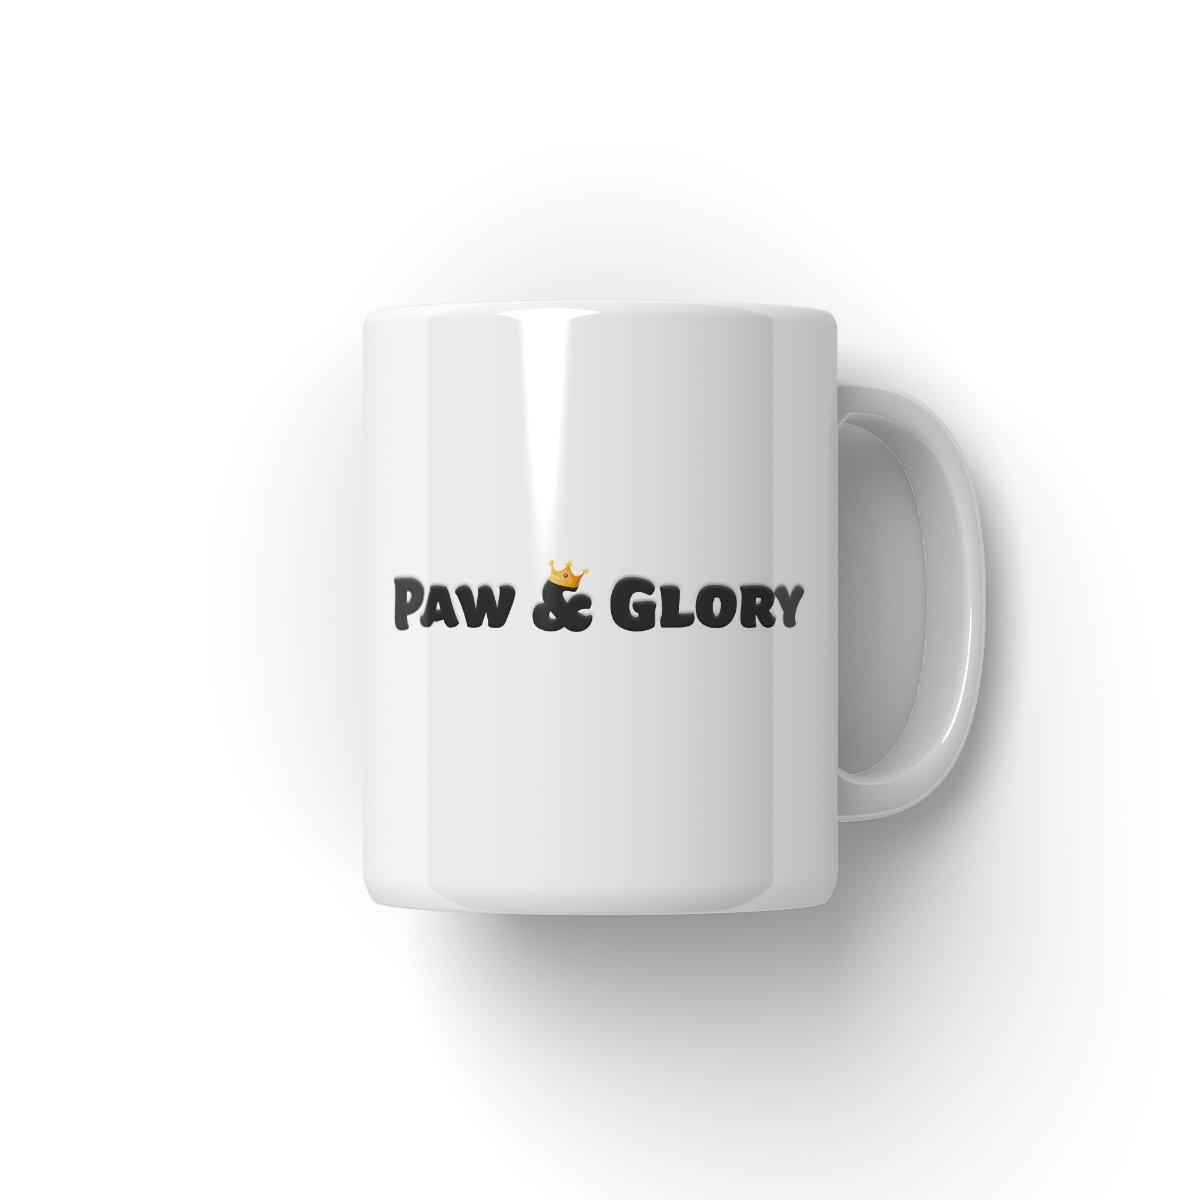 Paw & Glory, paw and glory, coffee mug with dogs, personalized pet mug, dog mugs personalised, personalised dog mug, personalised mugs with dogs, personalized dog mug, Pet Portraits Mug,